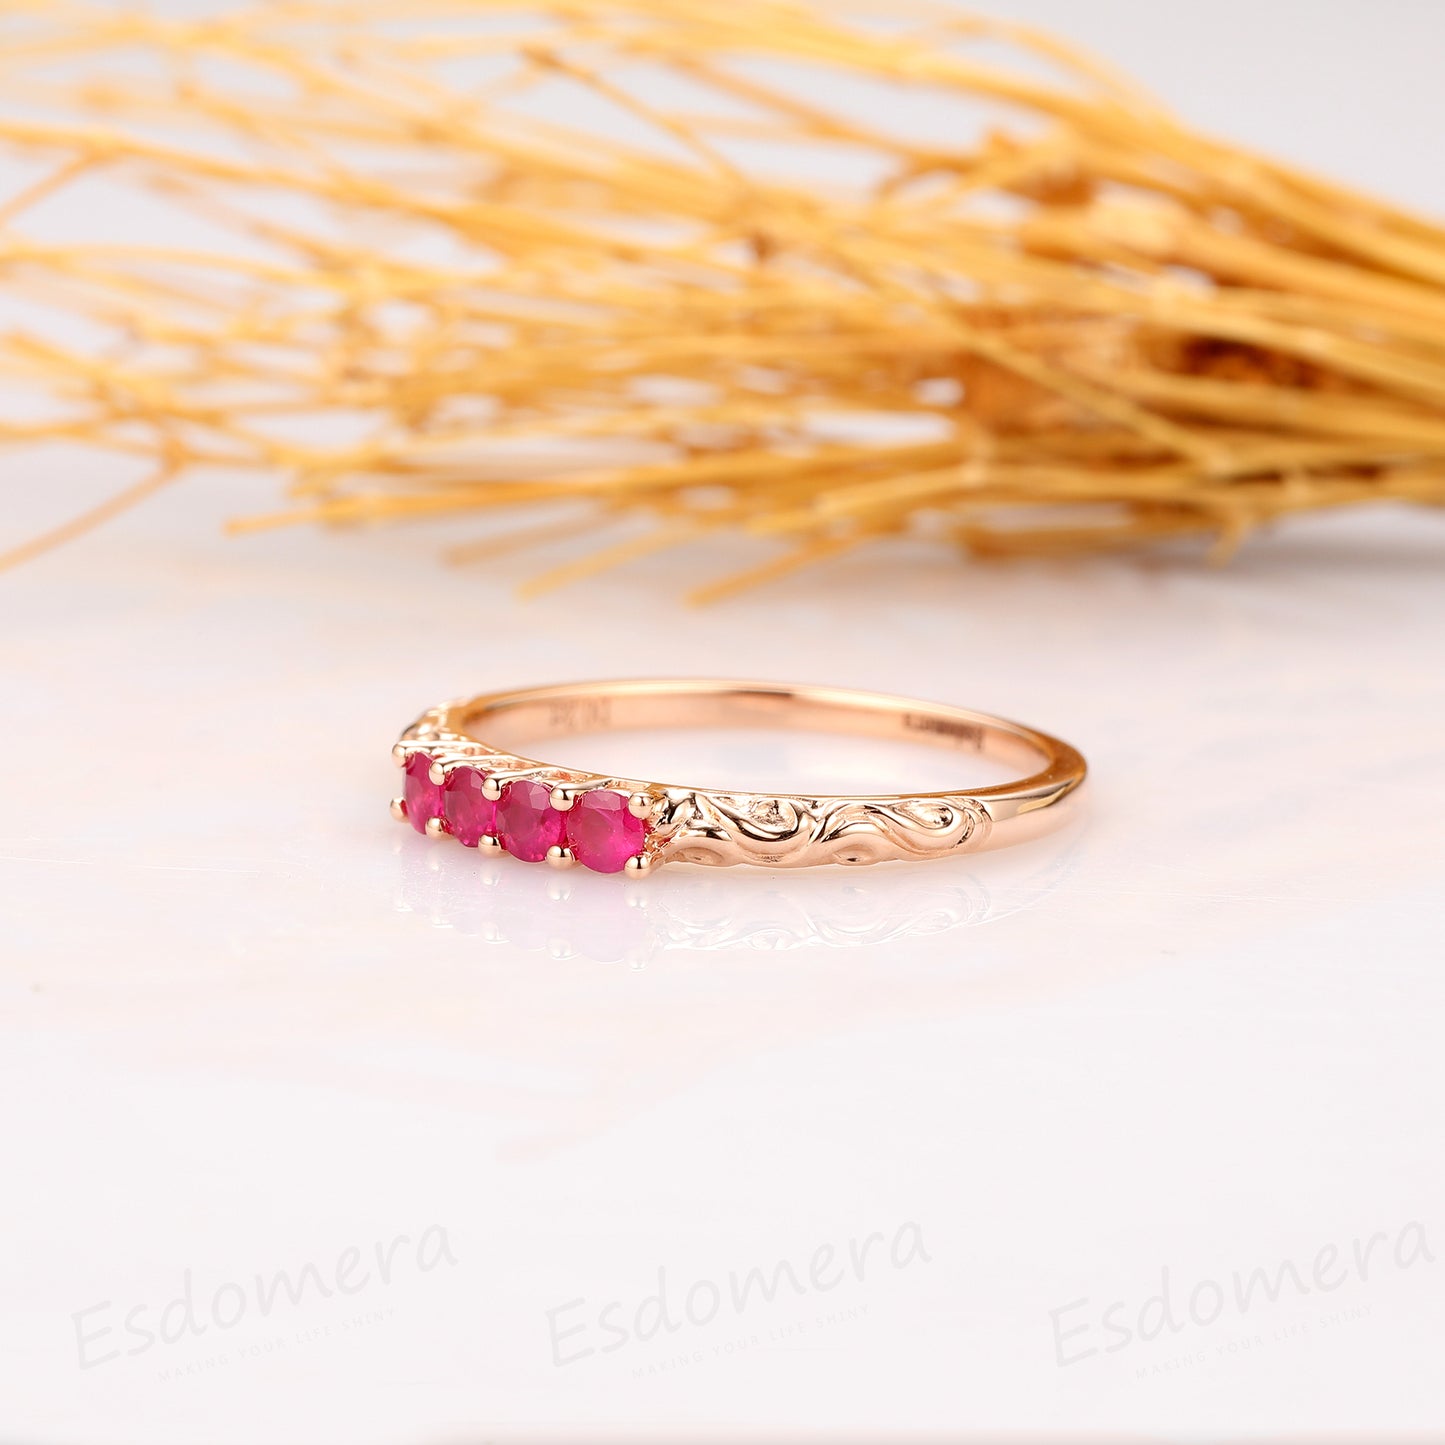 Natural Red Ruby Ring, 14k Rose Gold Wedding Band, Real Gemstone Ring